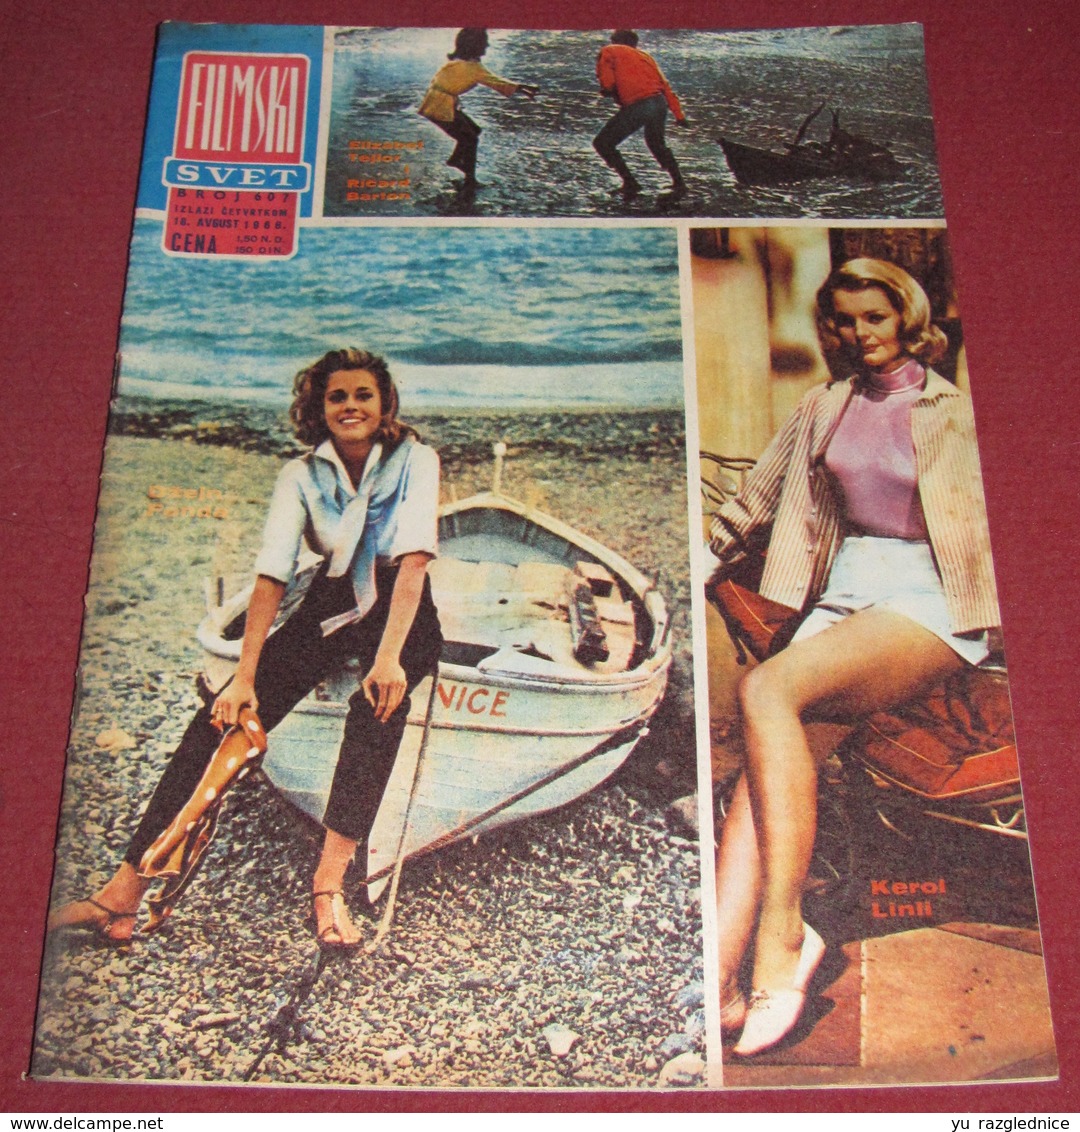 Jane Fonda Carol Lynley Elizabeth Taylor FILMSKI SVET Yugoslavian August 1966 VERY RARE - Magazines